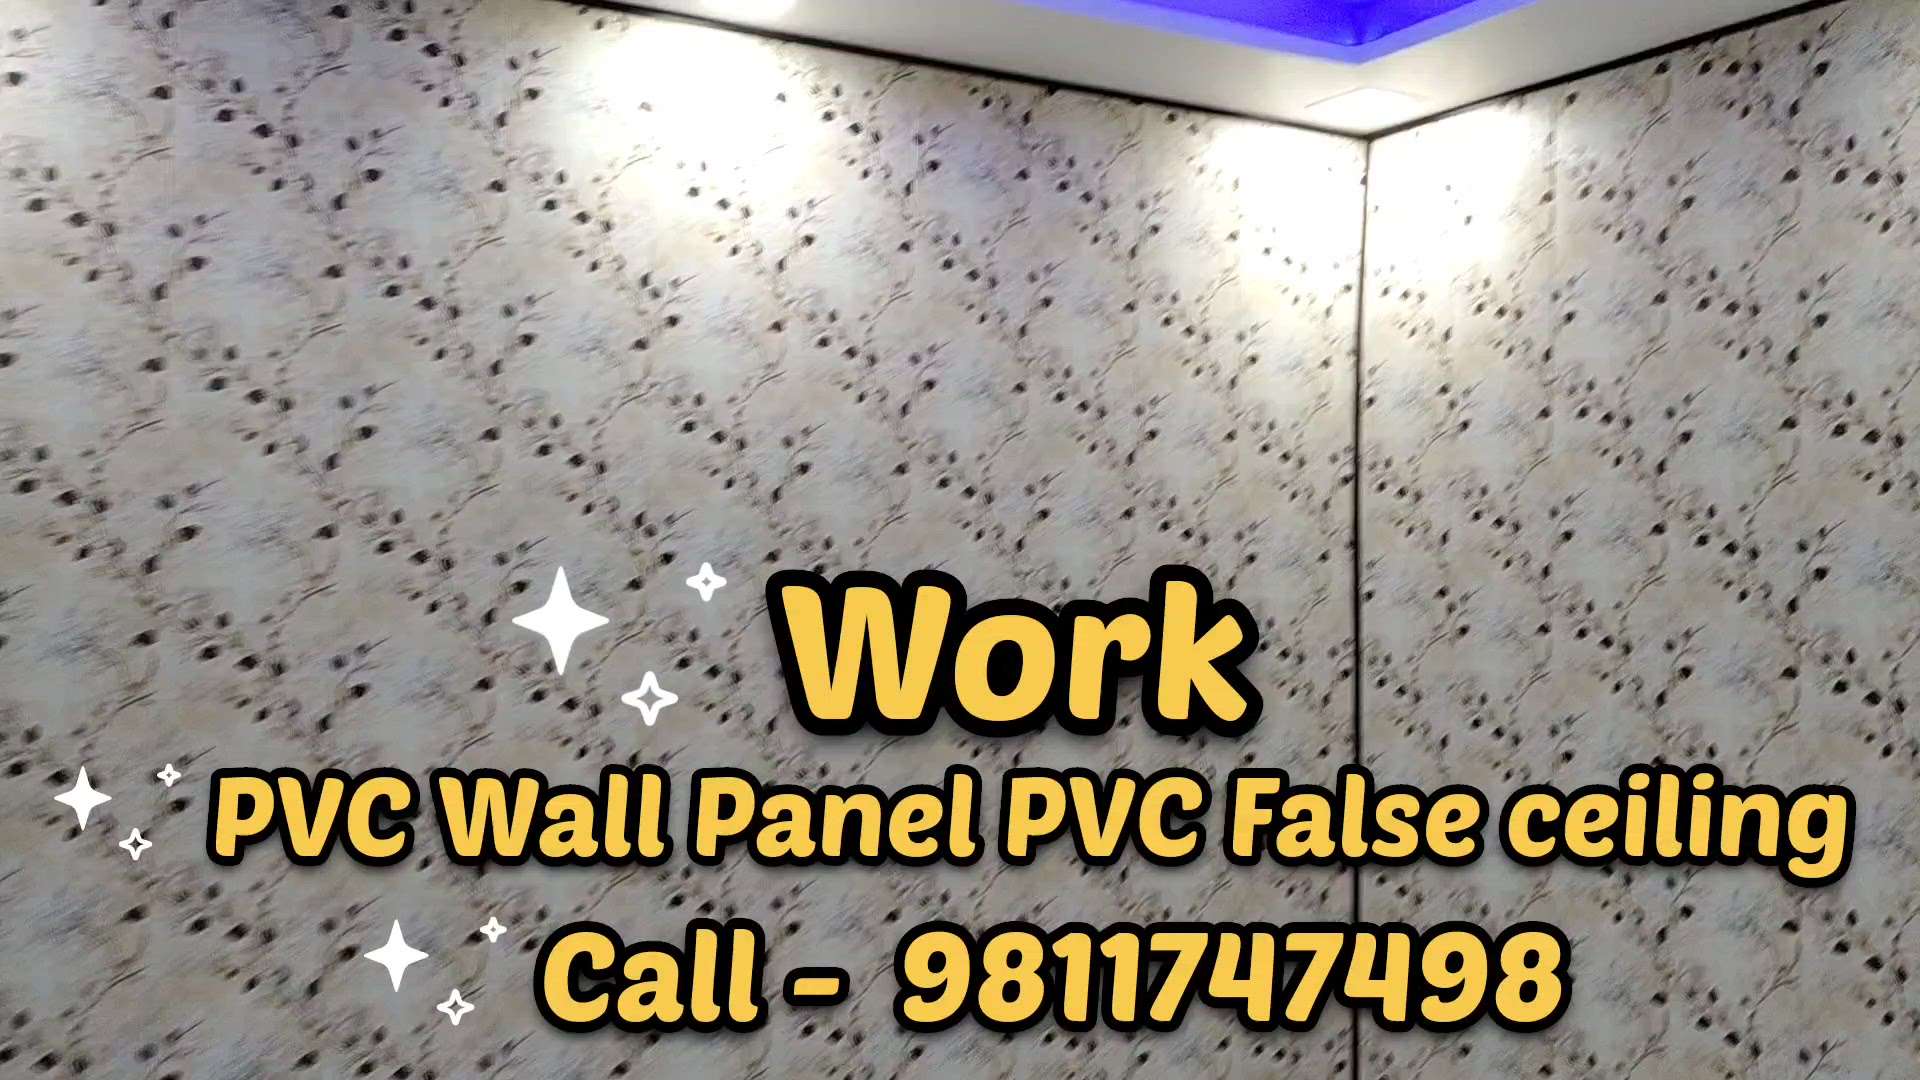 Gitanjali Home Decor 
Watsapp no 9811747498
Call 9811727498 
Pvc wall Panel Pvc False Ceiling WPC Louver Wallpapers Artificial grass